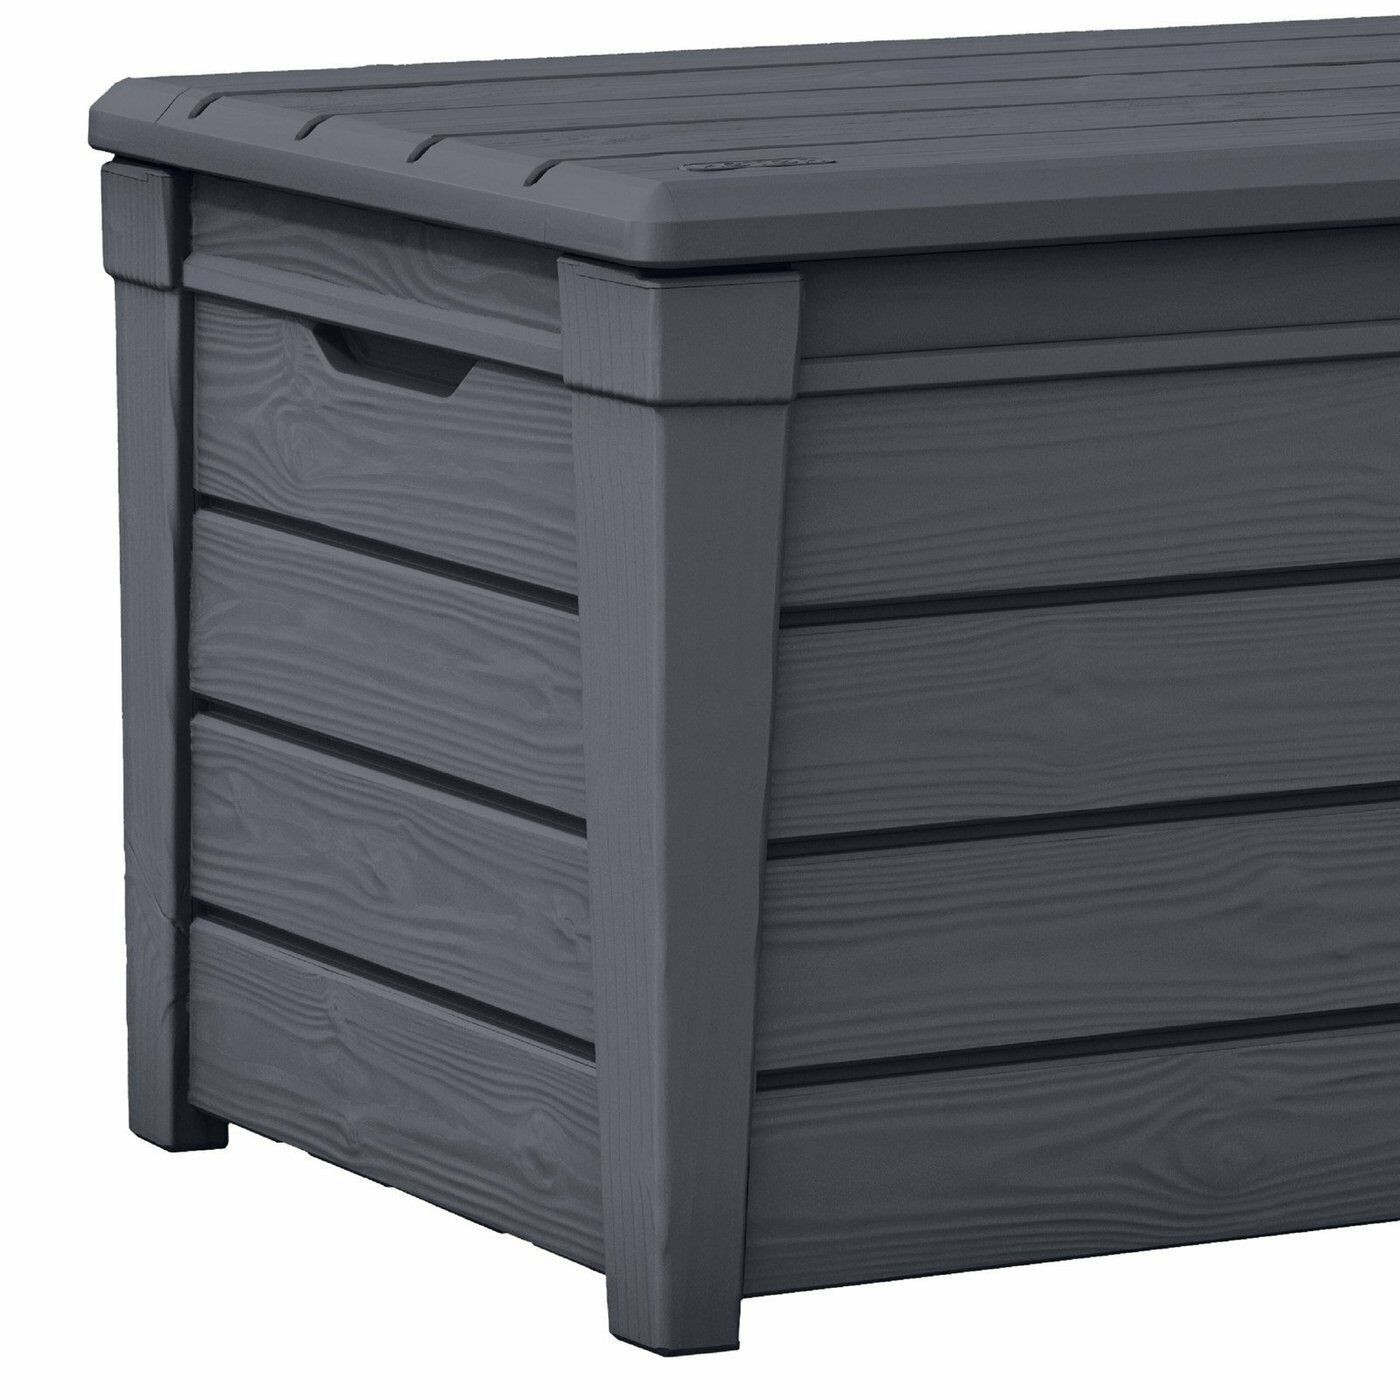 Best ideas about Patio Storage Box
. Save or Pin Patio Storage Box Outdoor Deck Yard Bench Garden Porch Now.